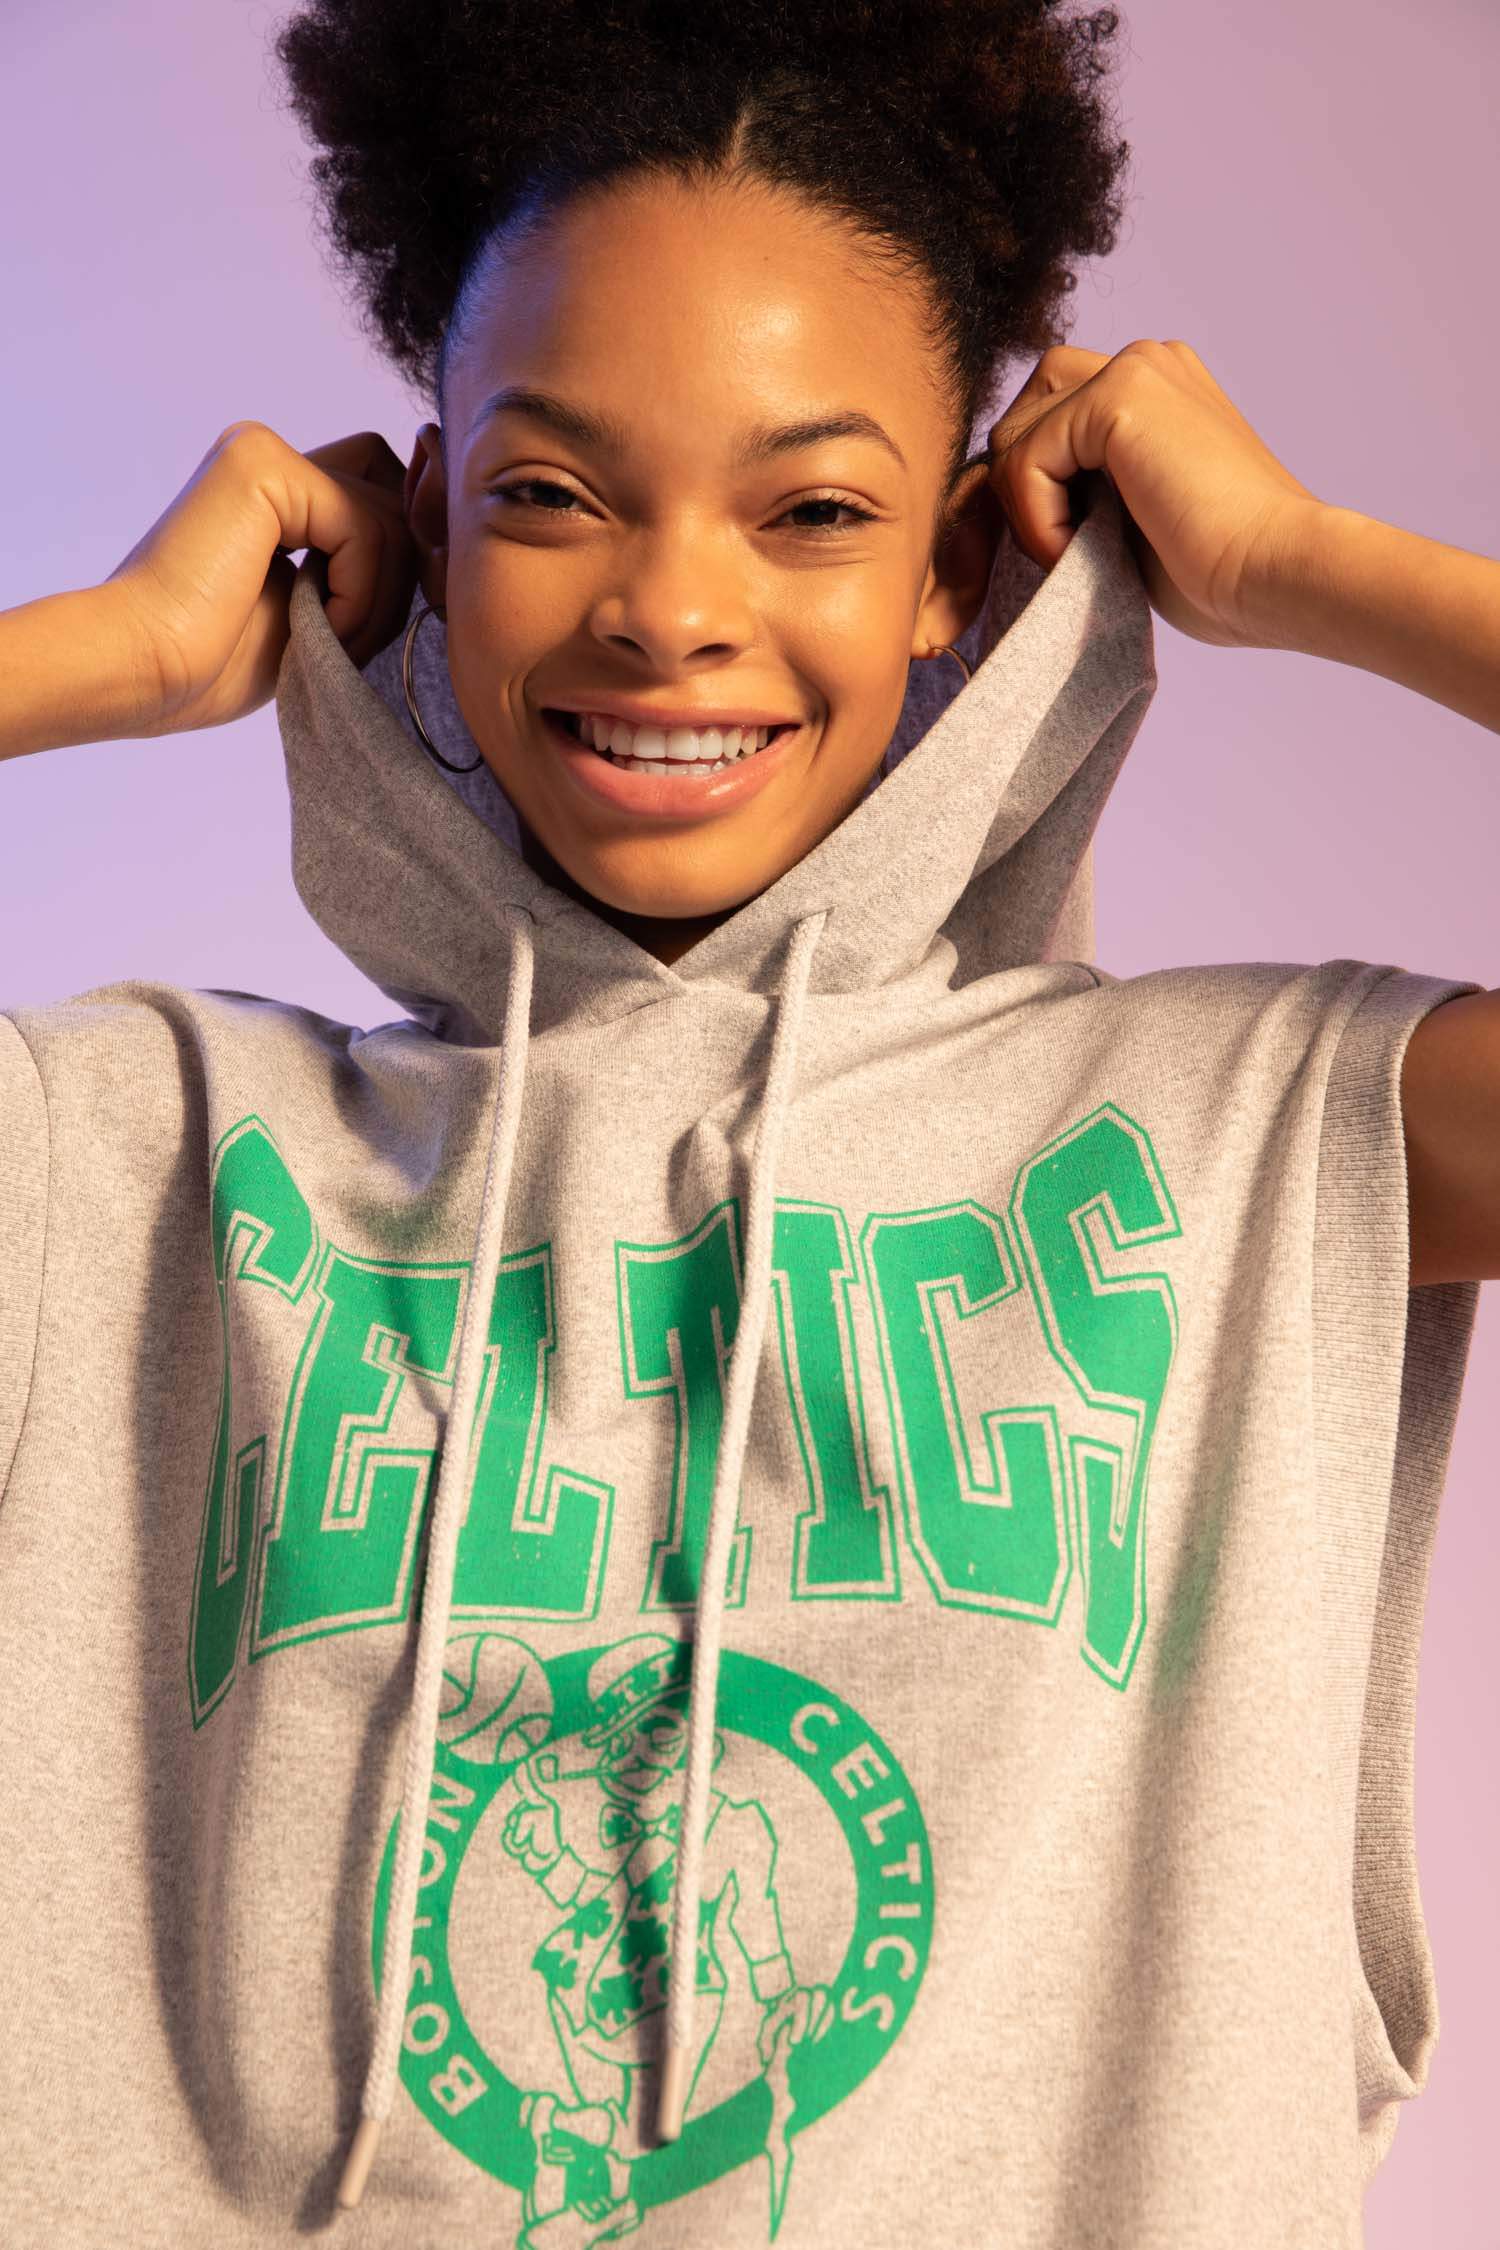 Real Women Love Basketball Boston Celtics T Shirt, Cheap Womens Celtics  Sweatshirt - Allsoymade